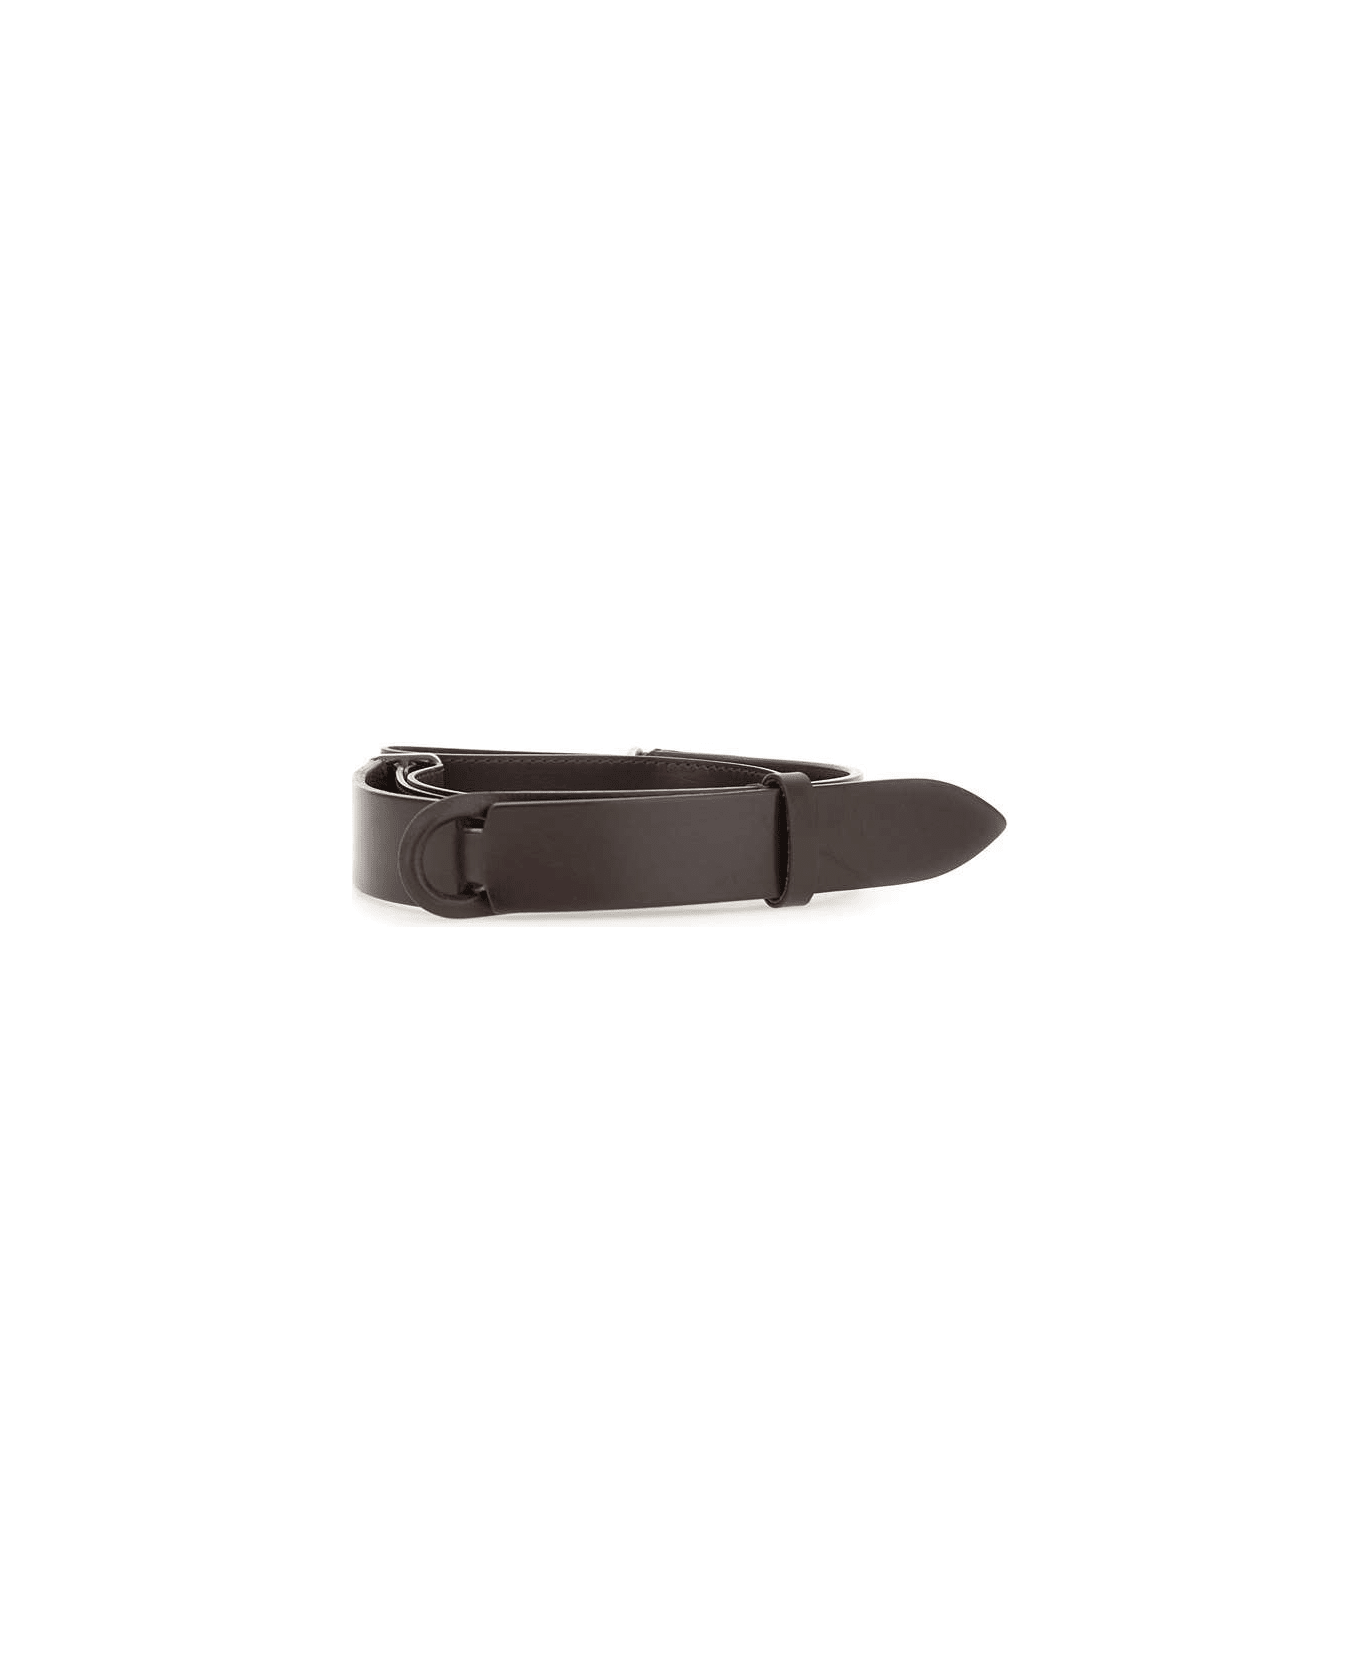 Orciani "nobukle Bull" Leather Belt - BROWN ベルト